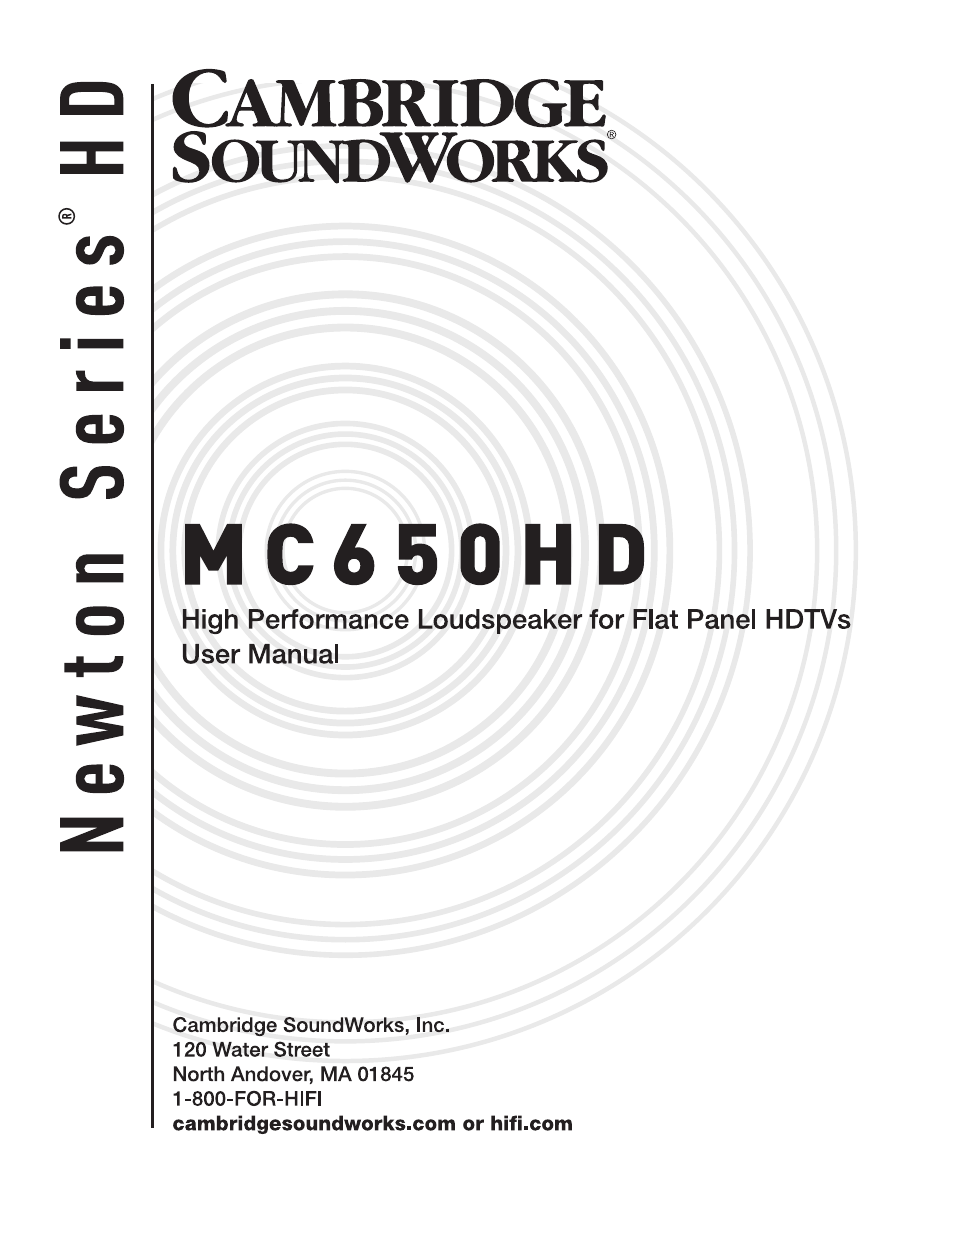 MC650HD: High Performance Loudspeaker for Flat Panel HDTVs